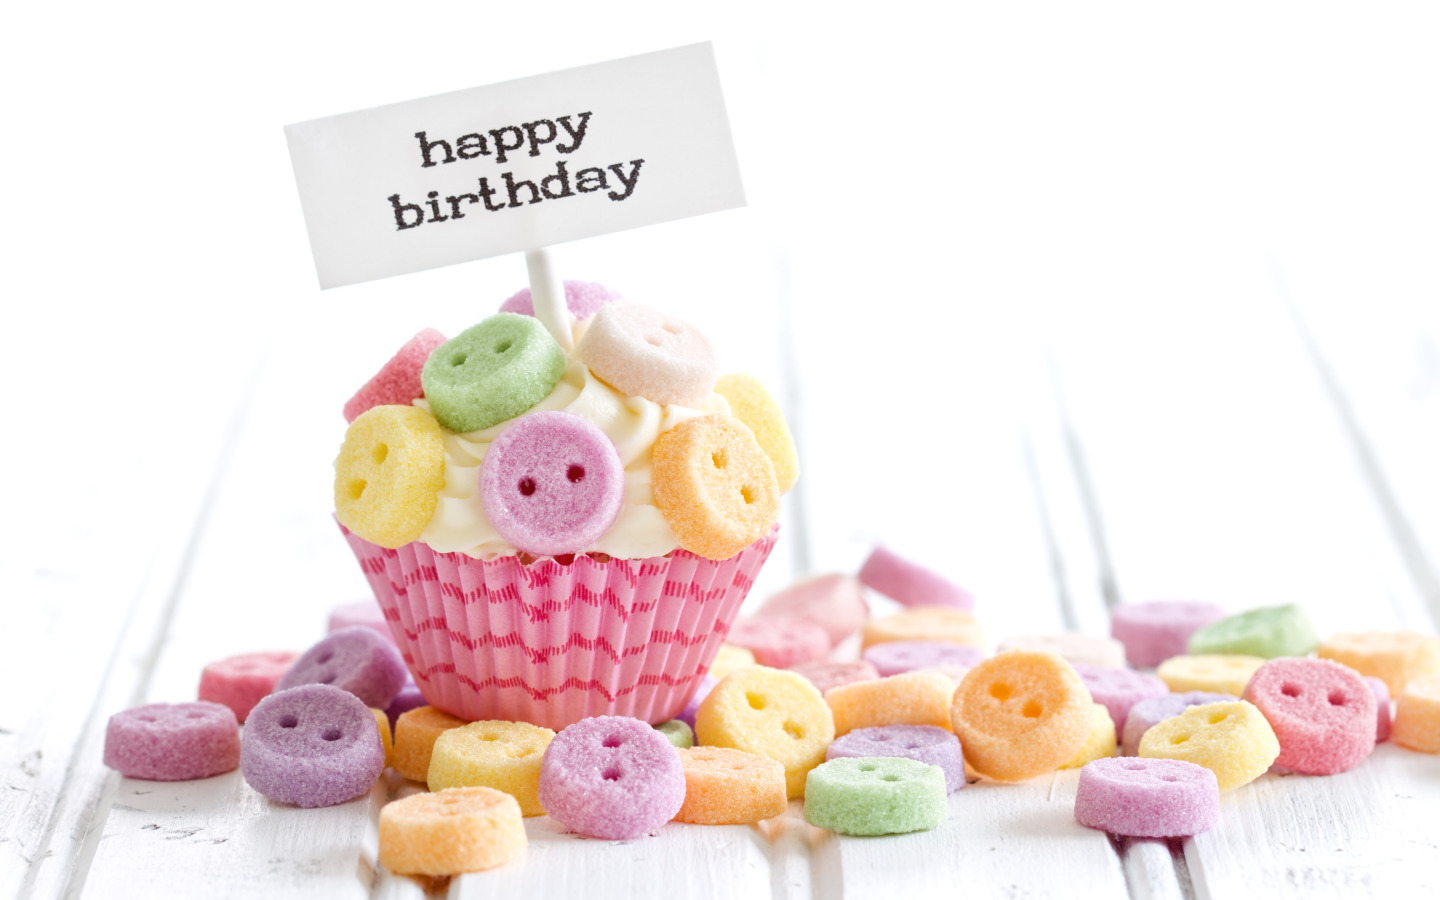 http://img3.goodfon.ru/original/1440x900/6/55/happy-birthday-birthday-cake.jpg